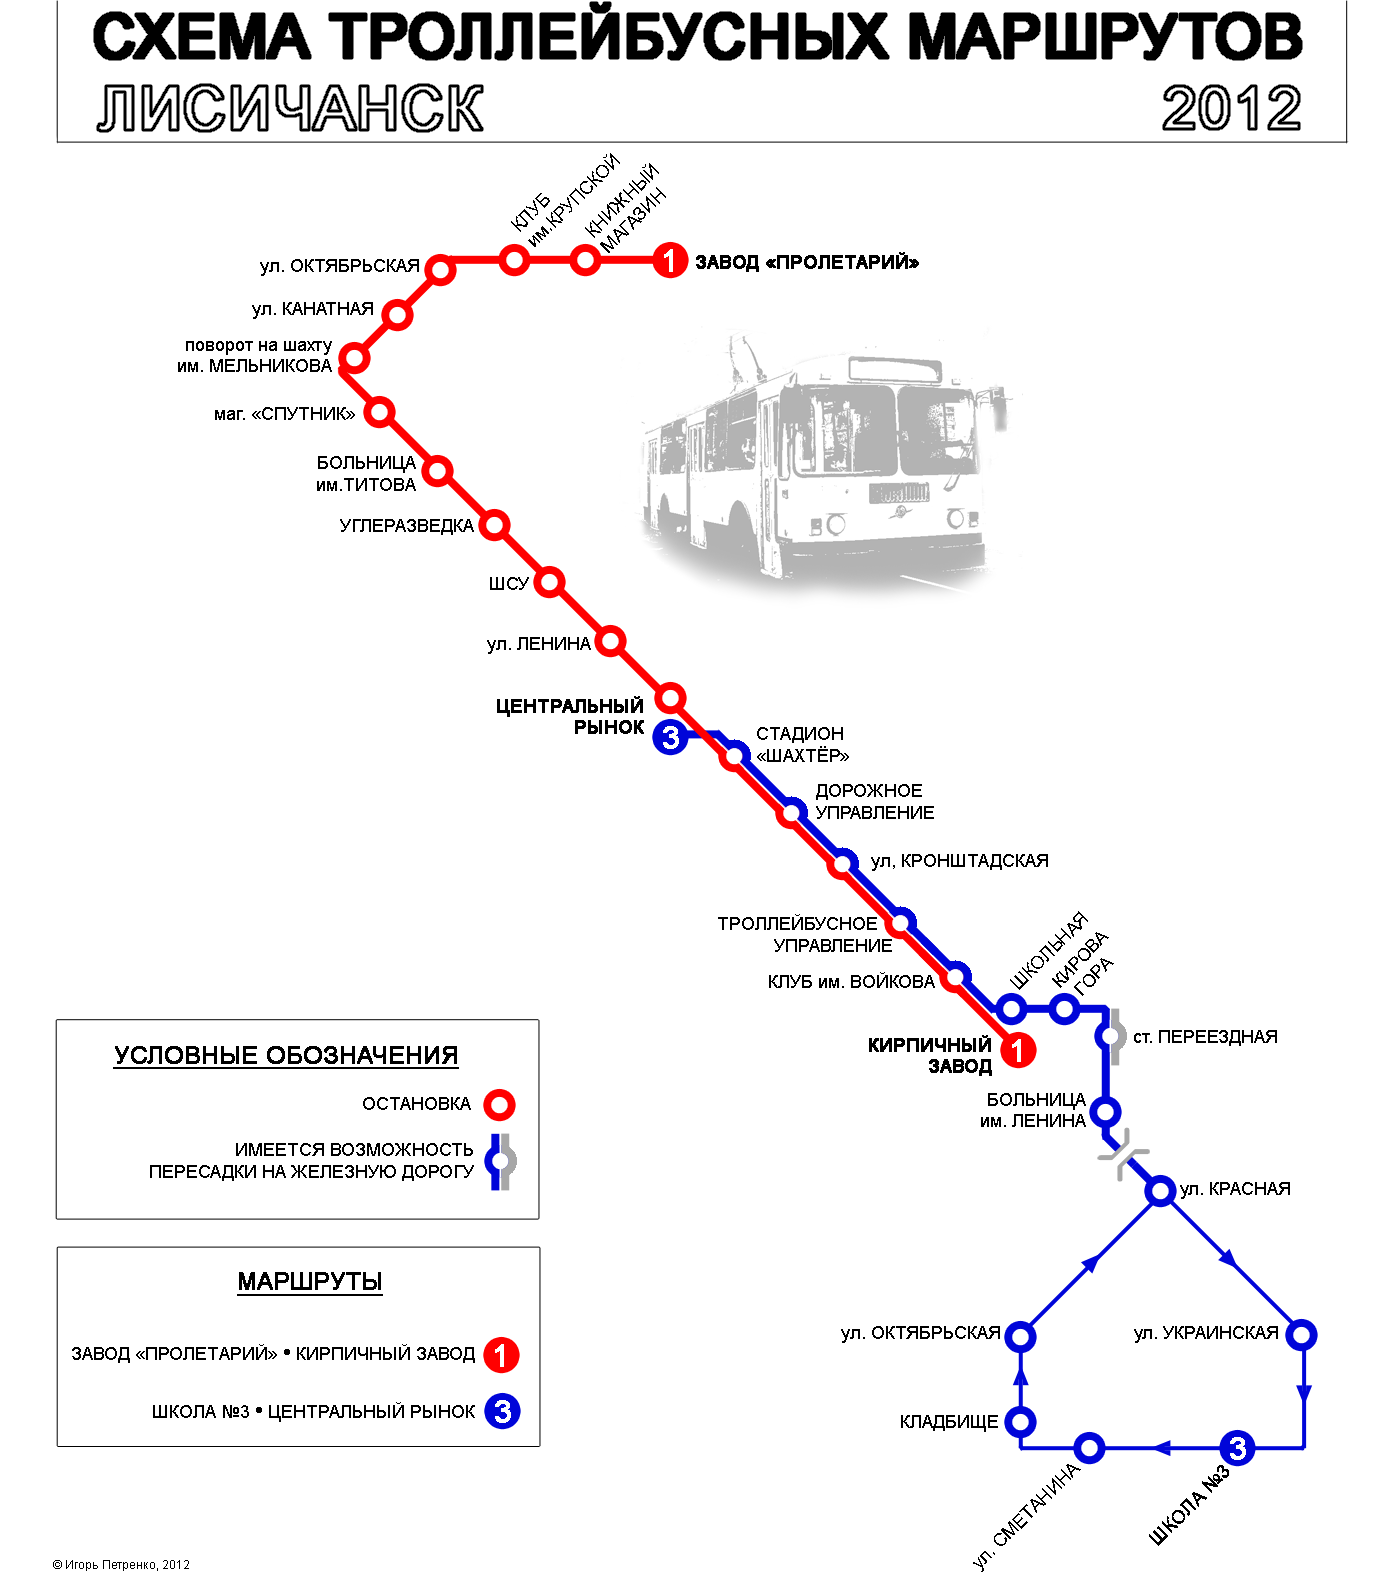 Lisichansk — Route maps